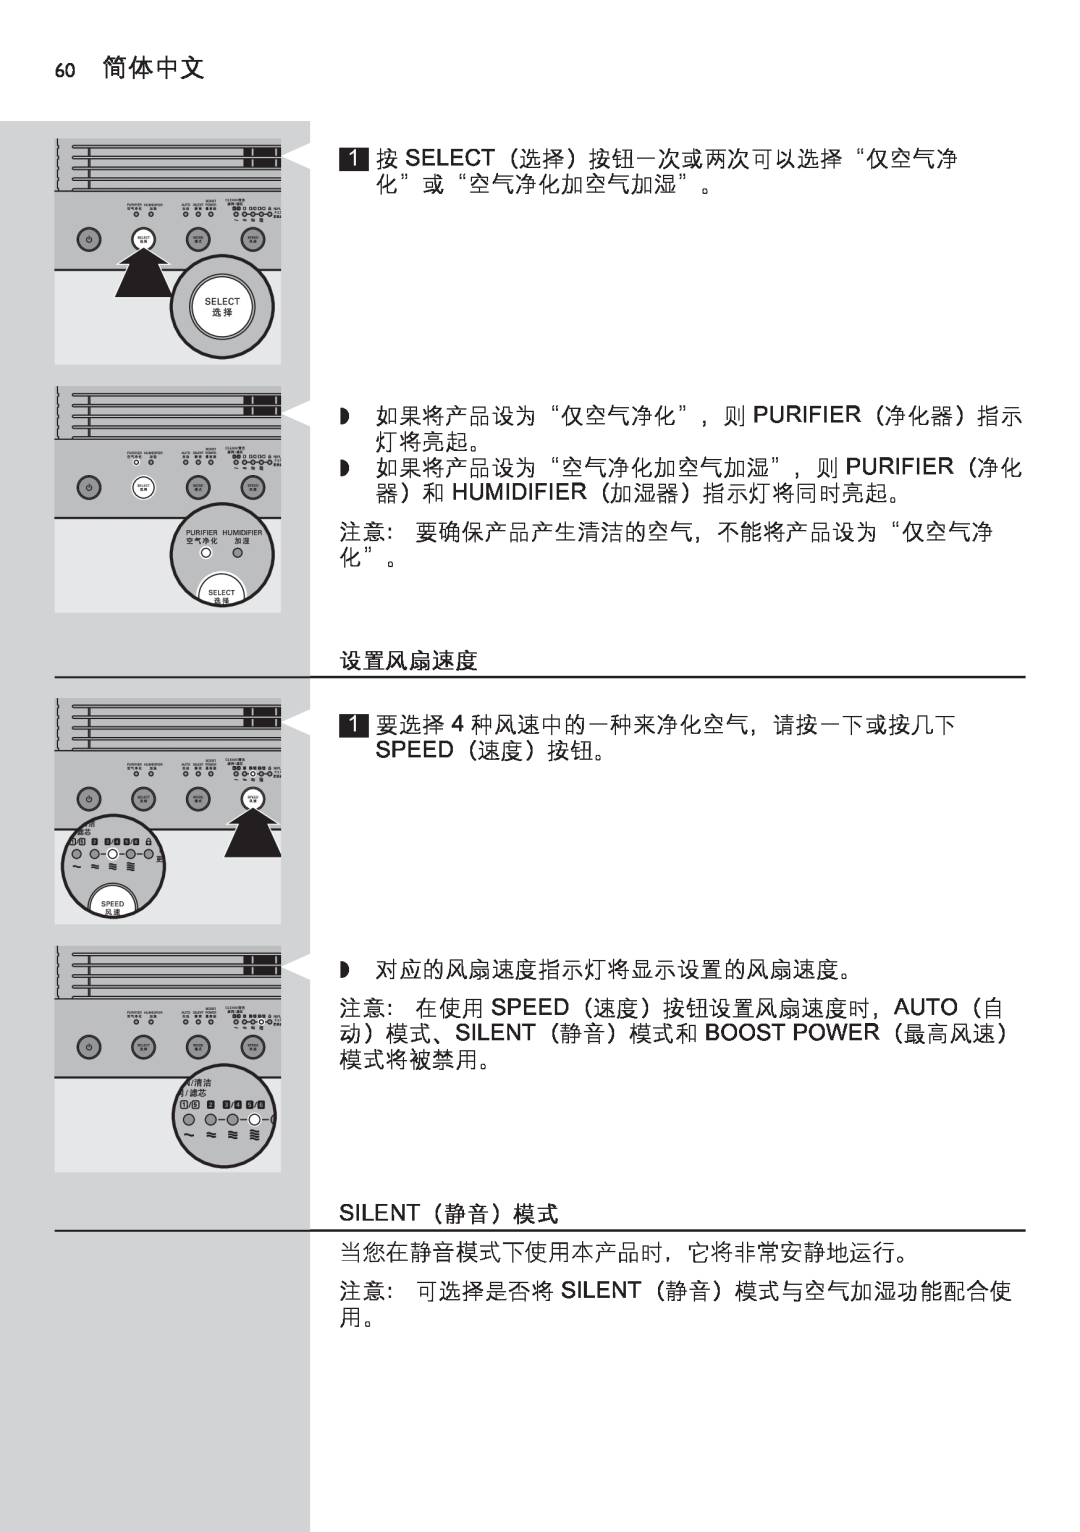 Philips AC4083 manual 60简体中文, 设置风扇速度, Silent（静音）模式 